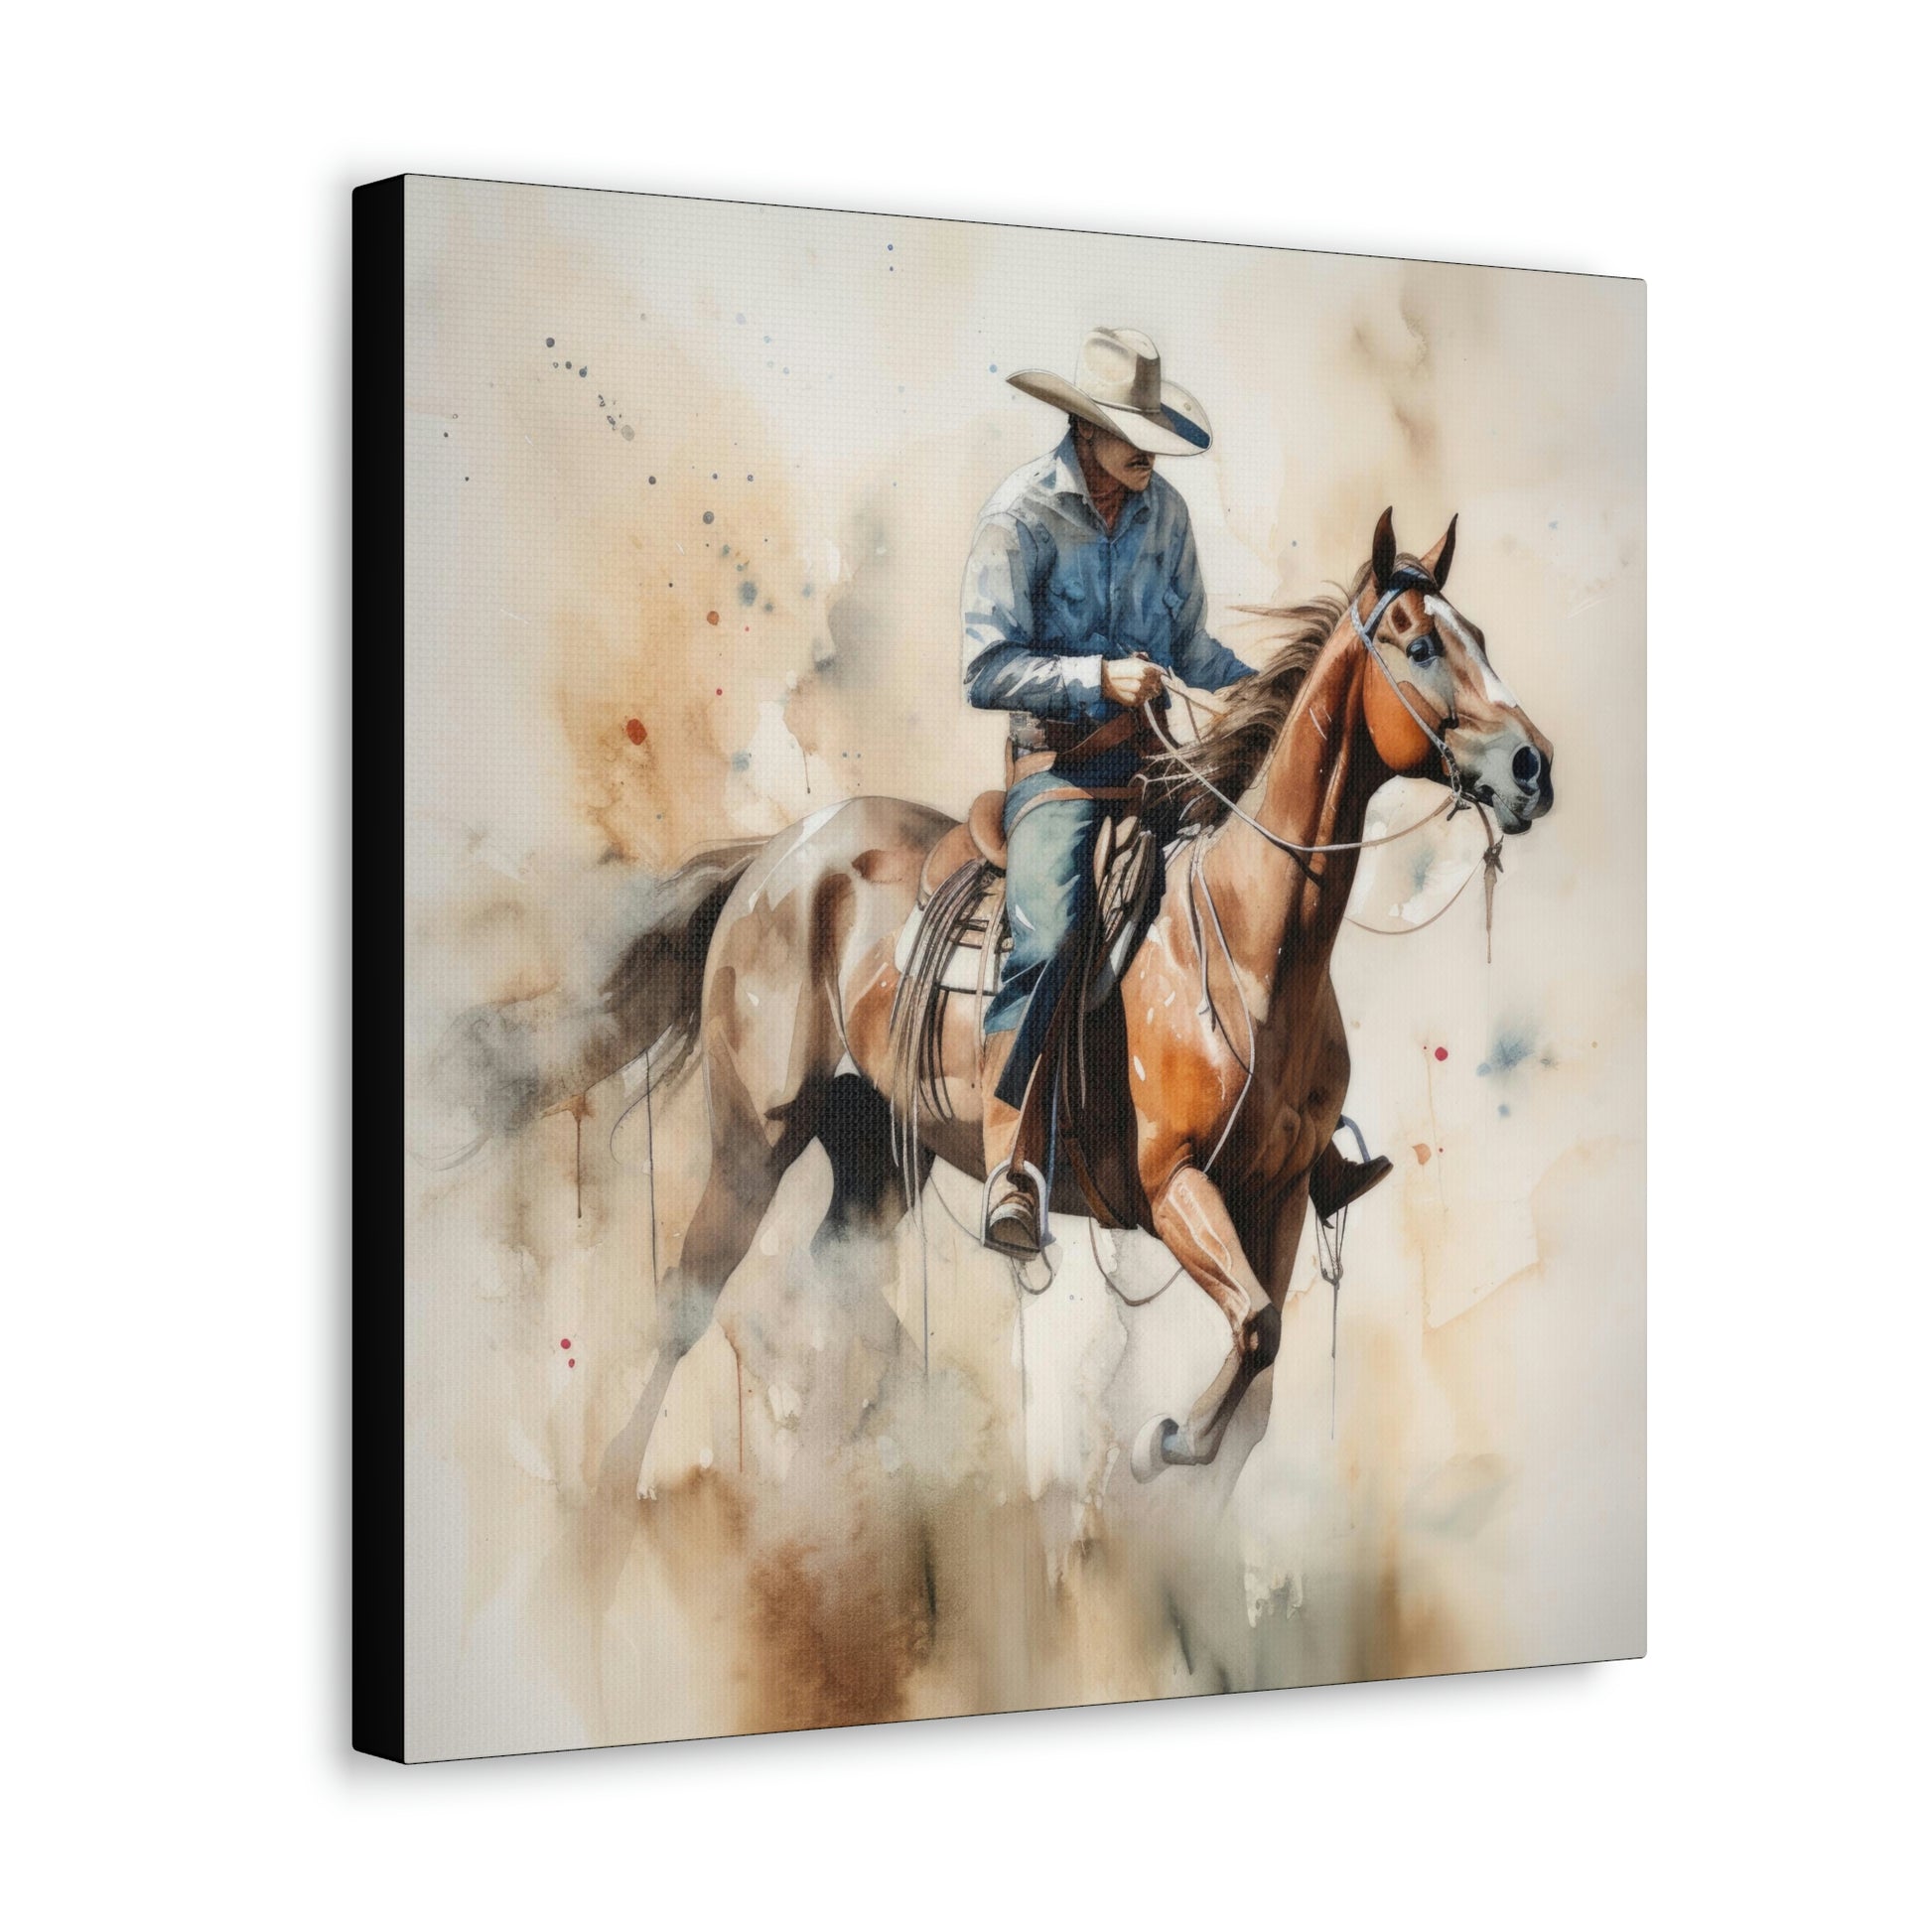 Cowboy riding bronc canvas wall art, cowboy with horse canvas decor, western canvas decor, rustic wall art with cowboy on horse, cowboy art print on canvas 